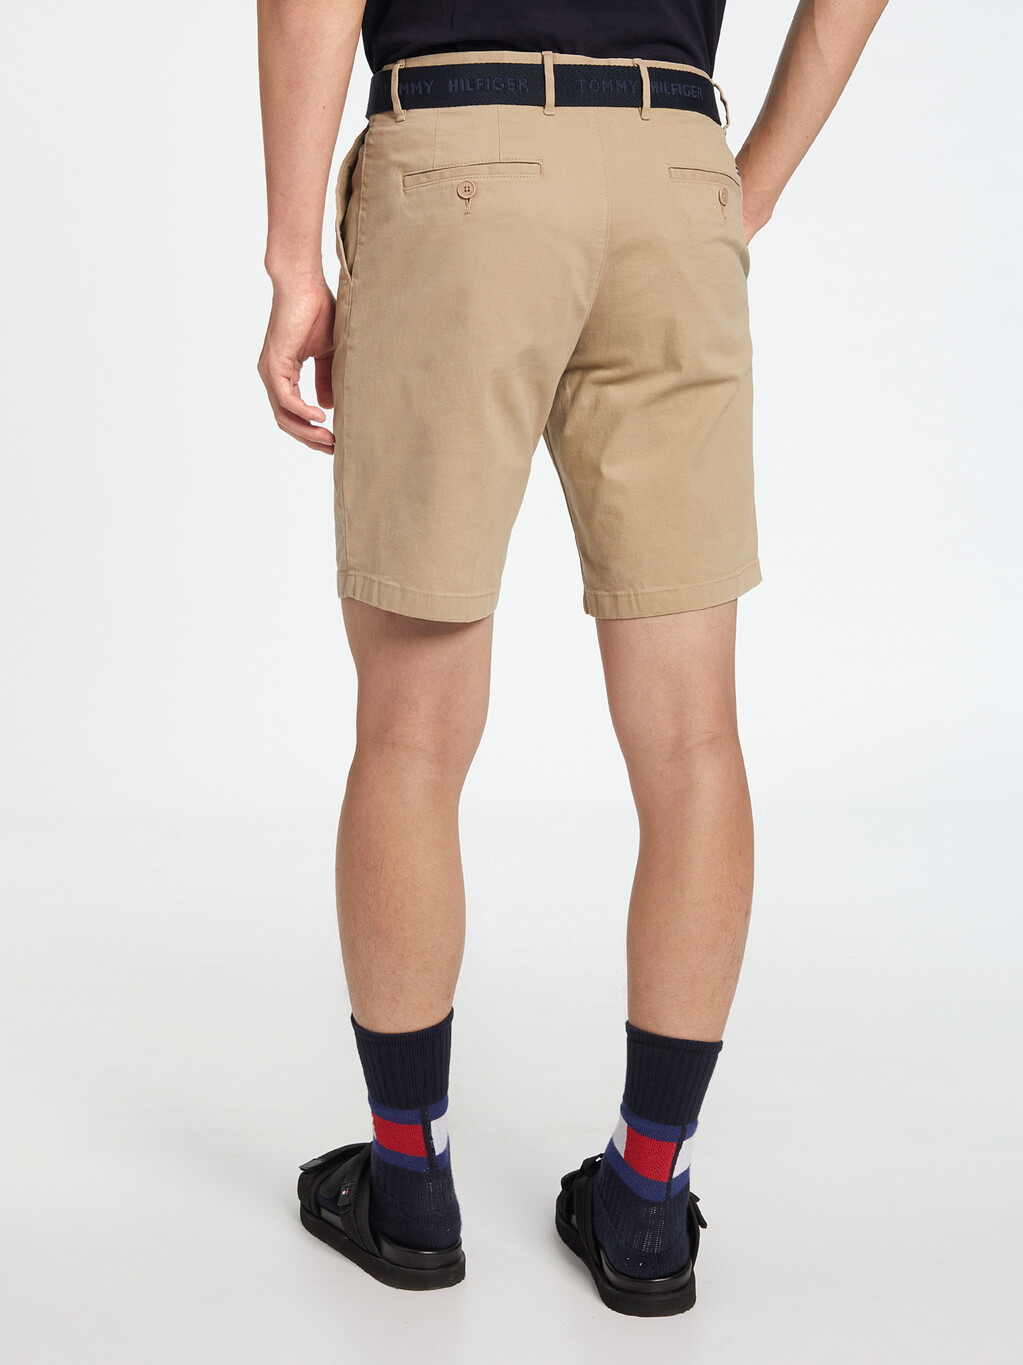 Essential Brooklyn Organic Cotton Twill Shorts With Belt, Beige, hi-res